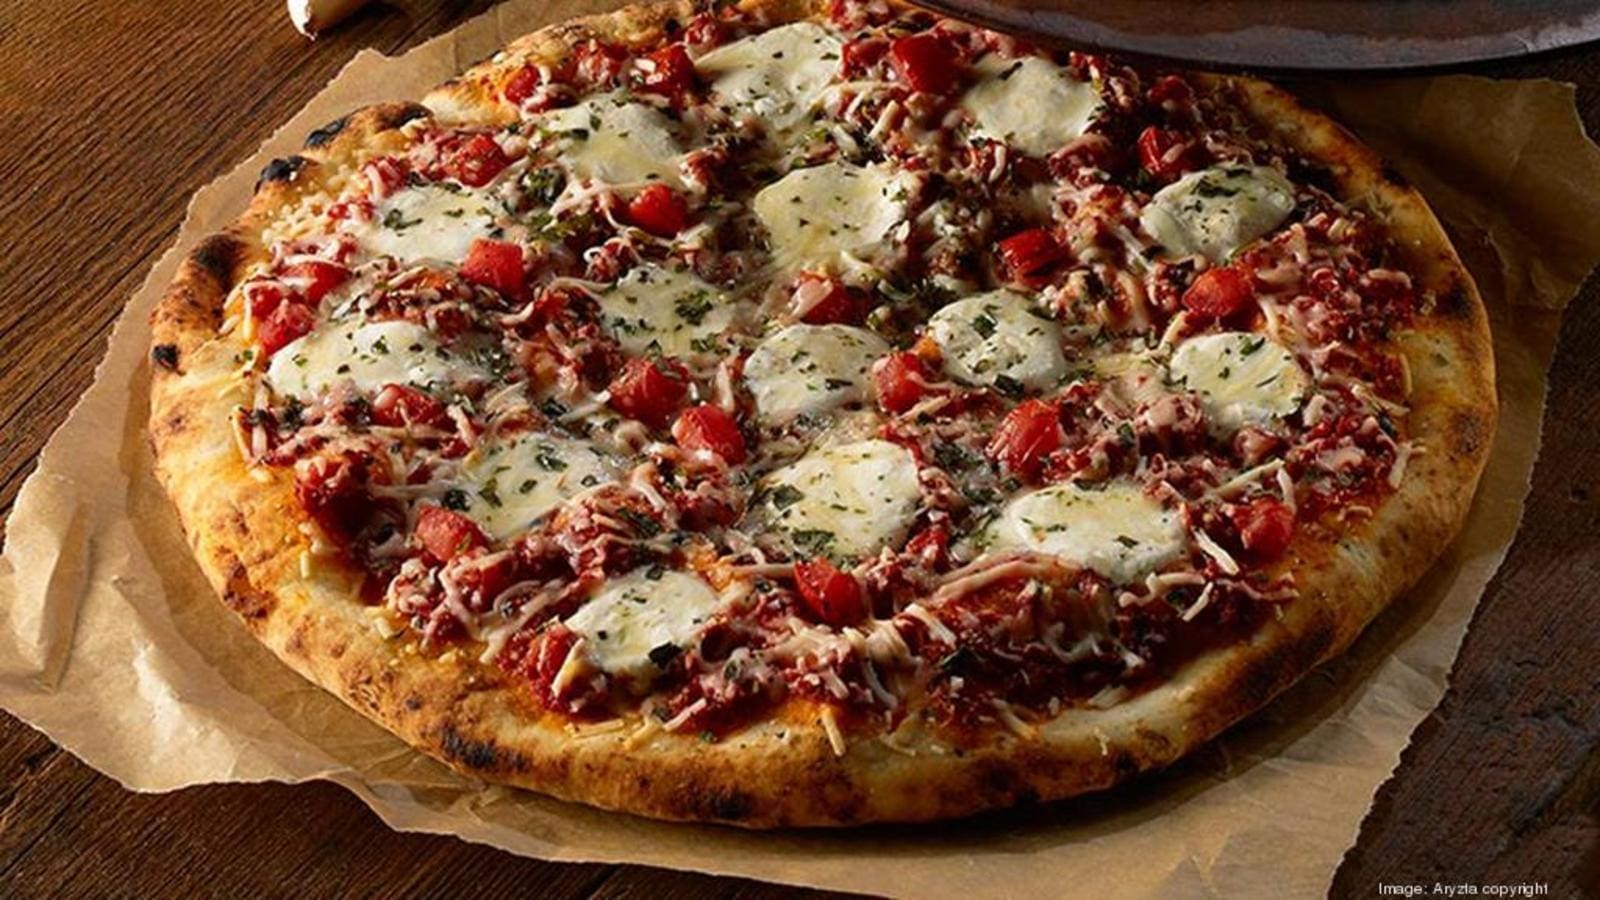 Arytza sells US frozen pizza business to Brynwood Partners